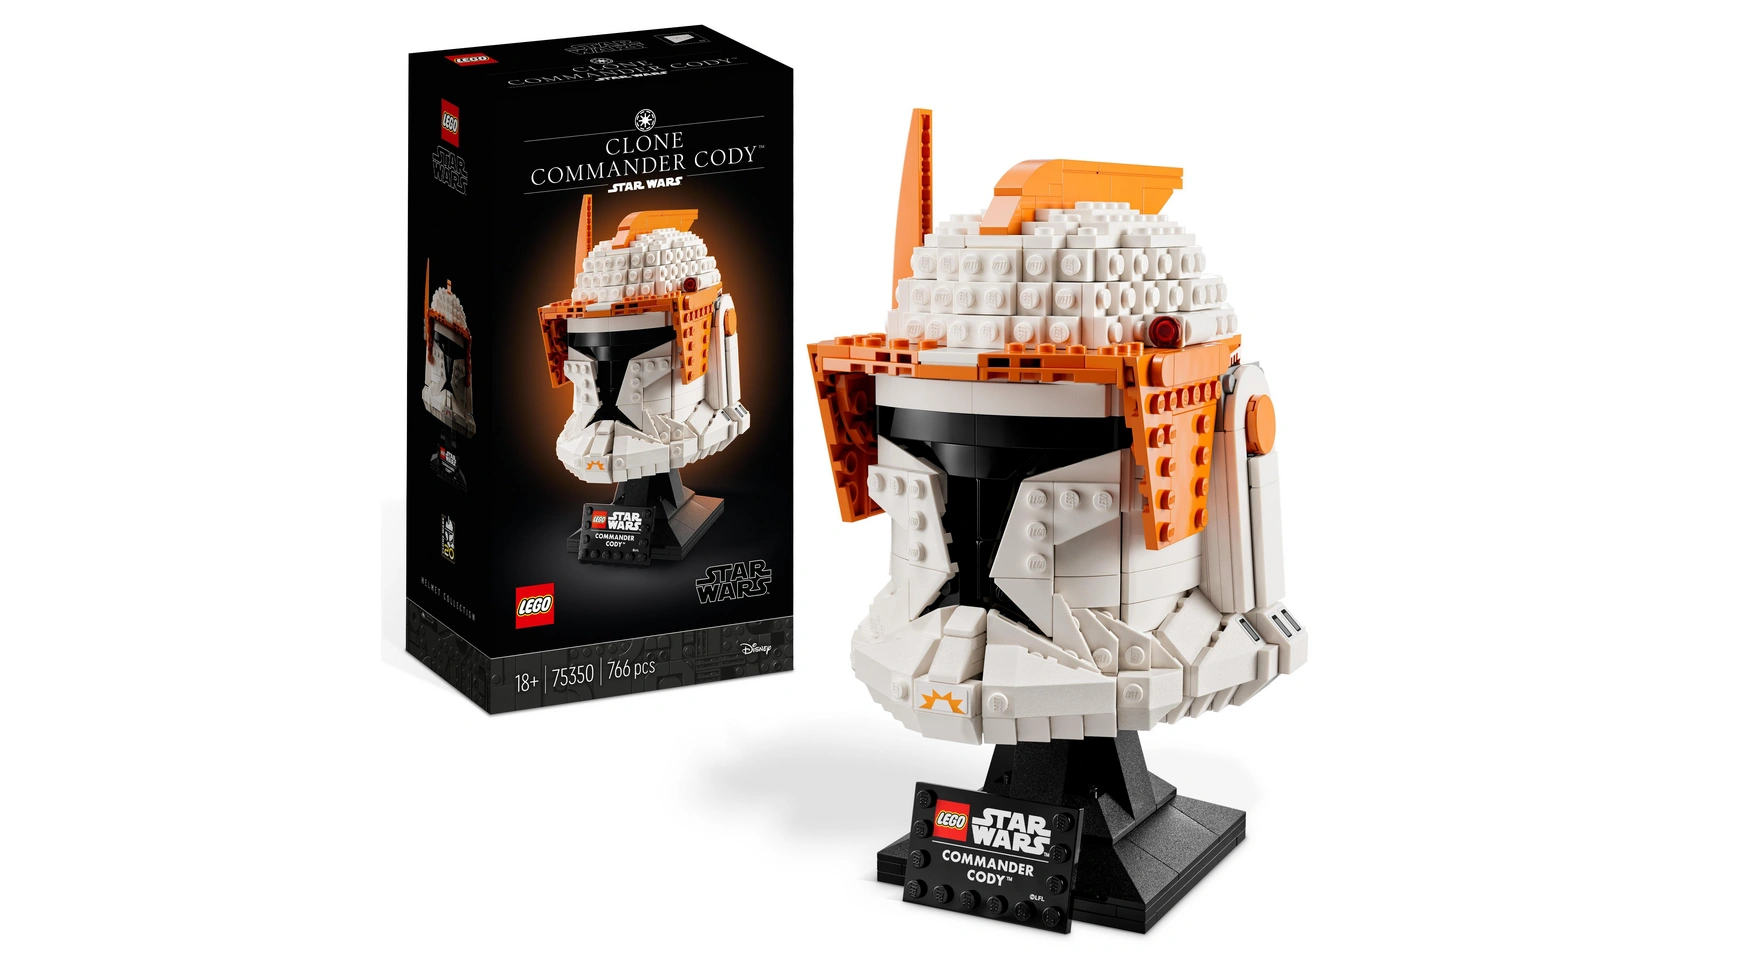 Lego Star Wars Набор шлемов командира клонов Коди для взрослых